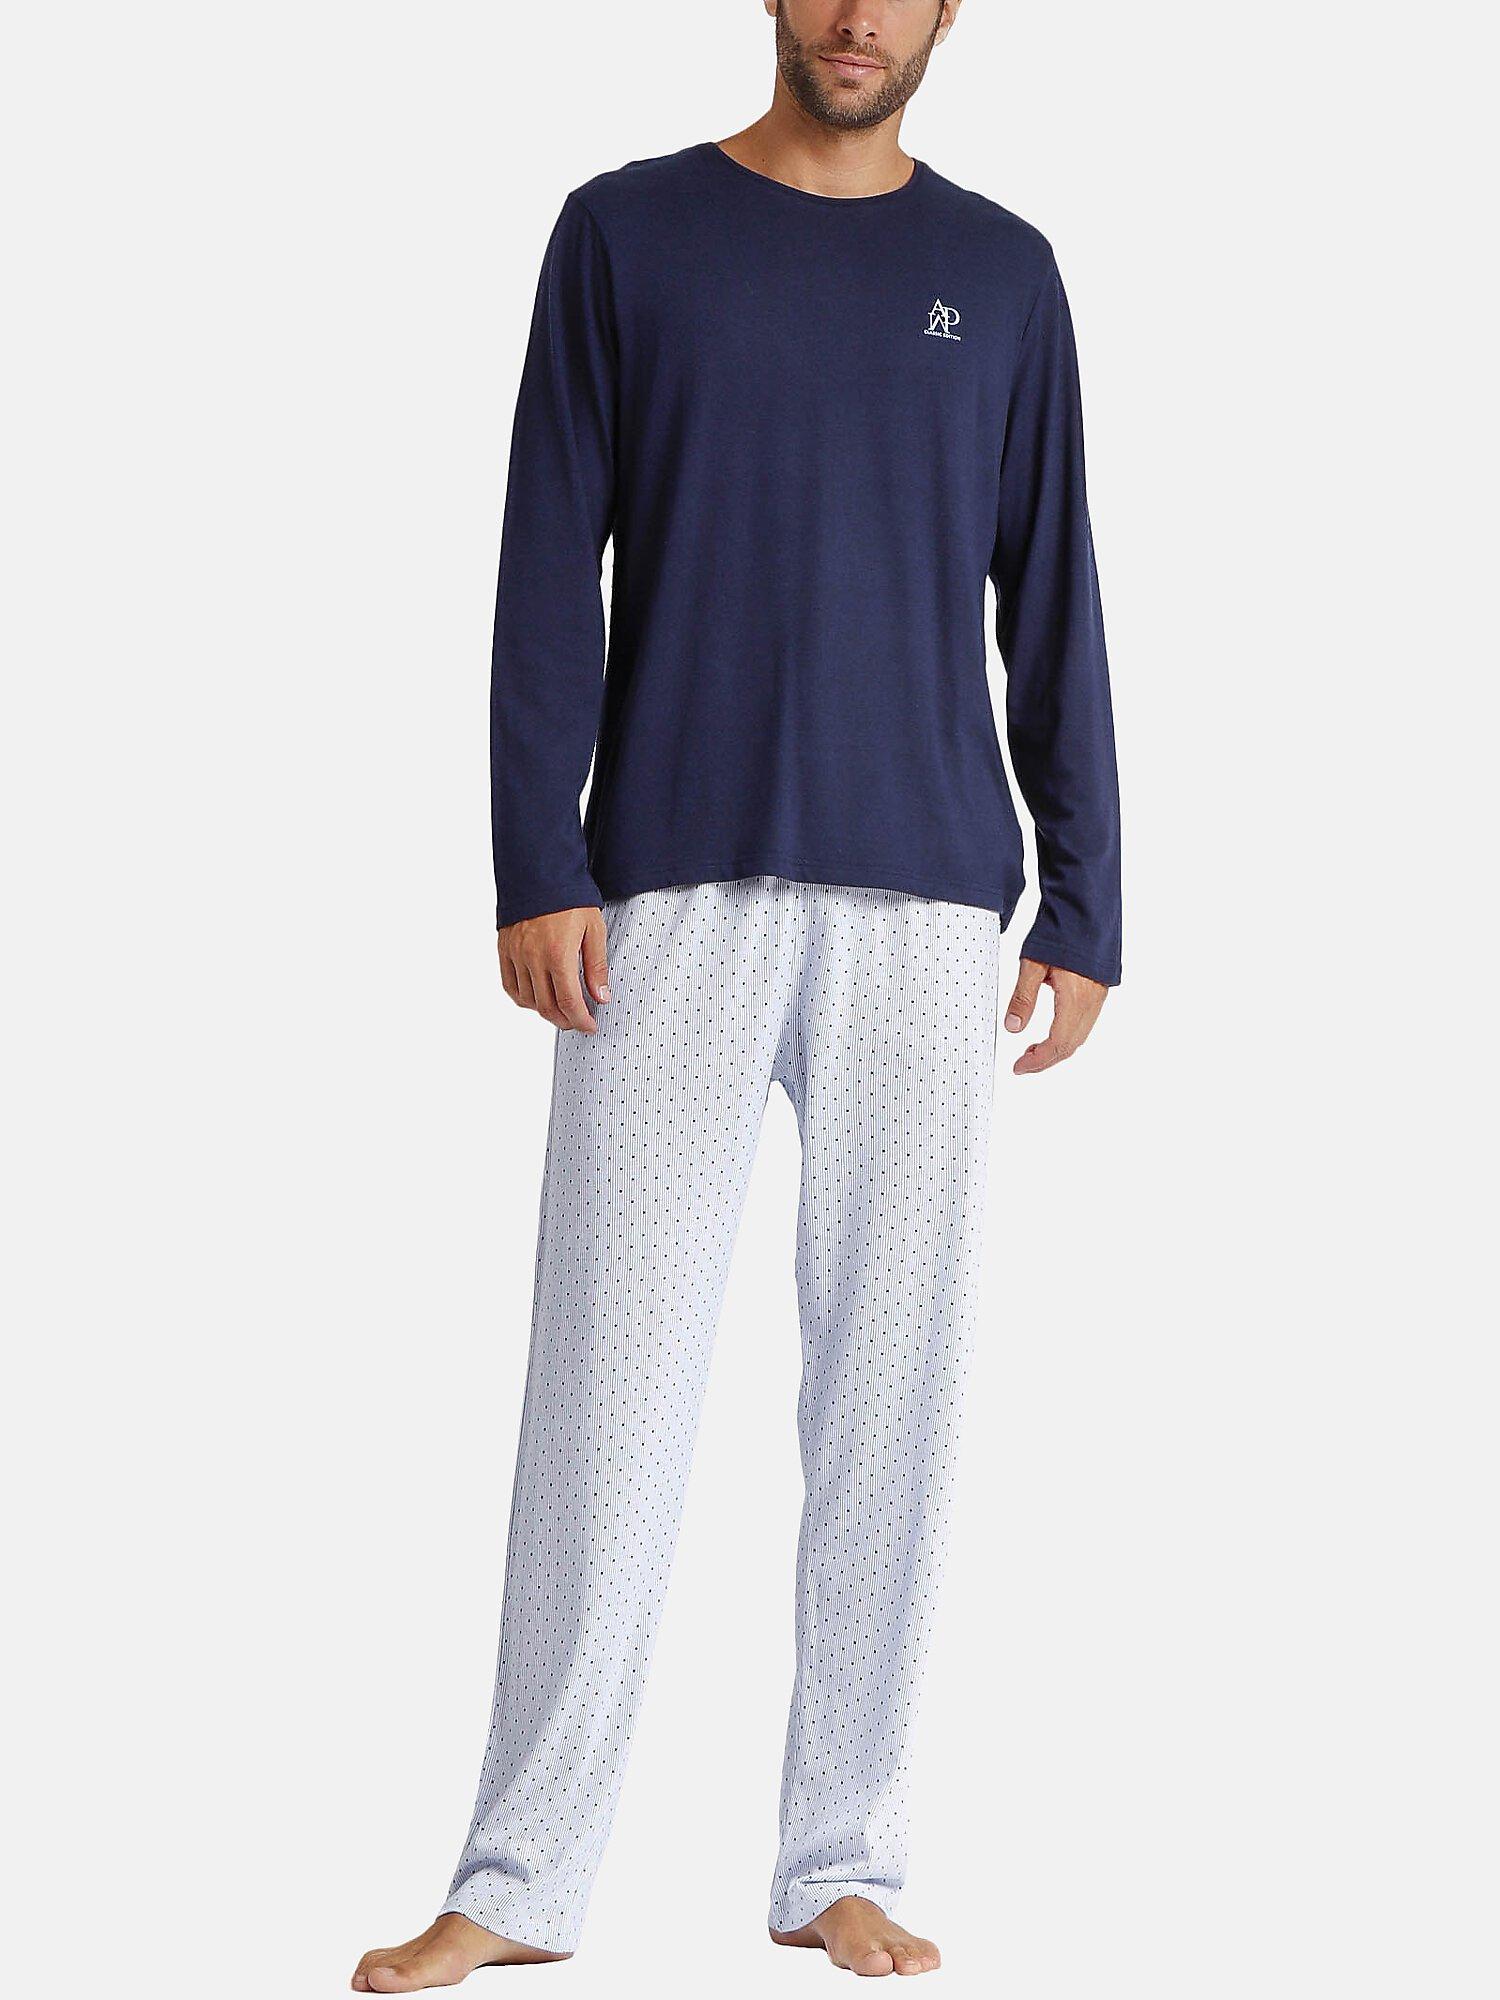 Pyjama Hose Top Langarm Stripes And Dots Herren Blau XL von Admas